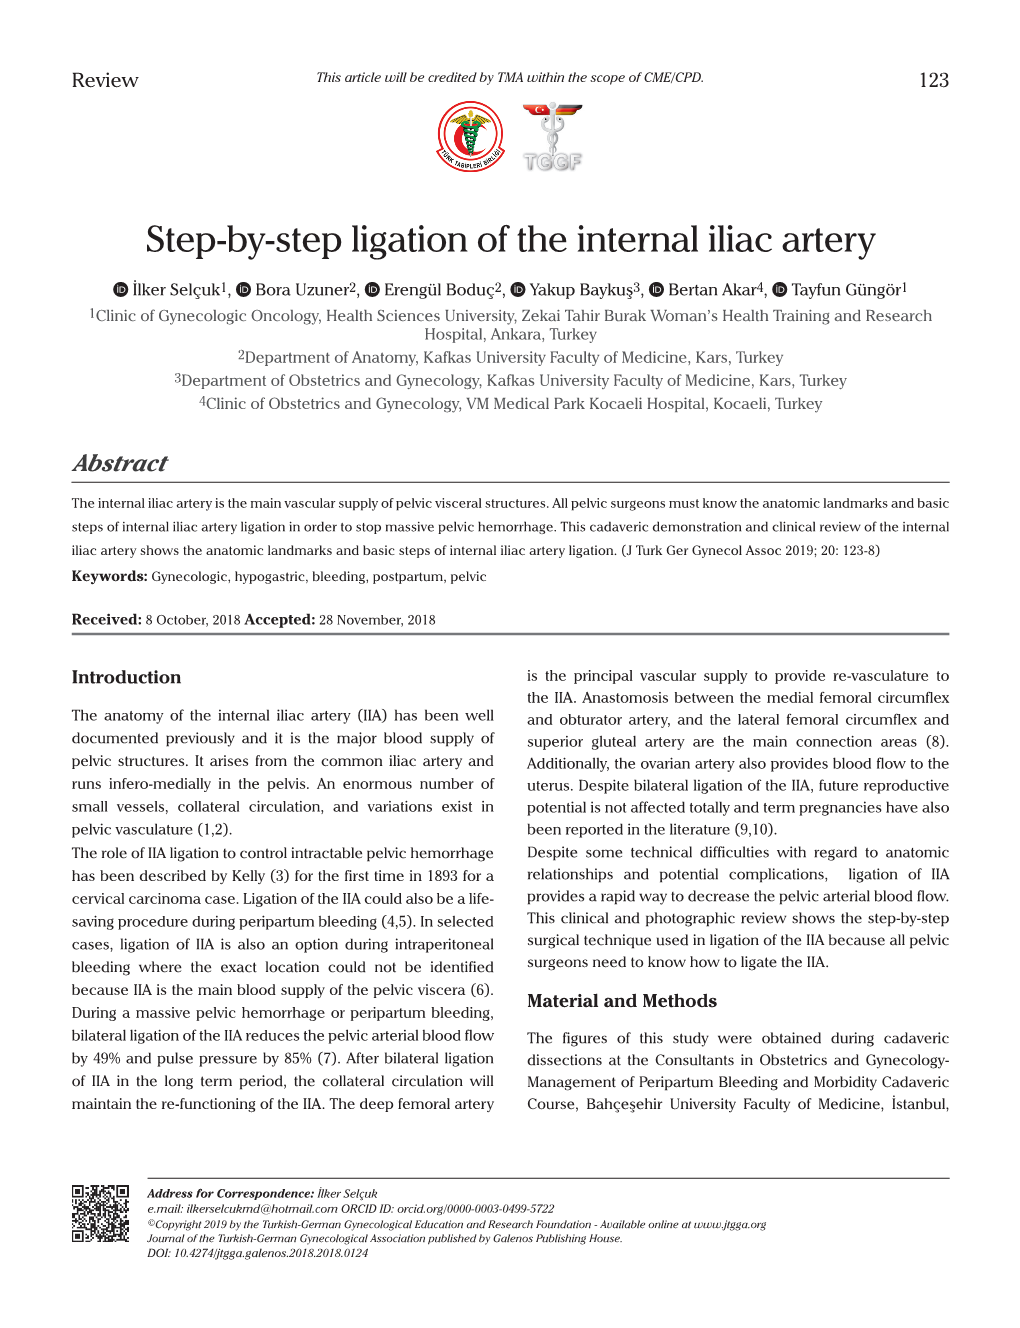 Step-By-Step Ligation of the Internal Iliac Artery